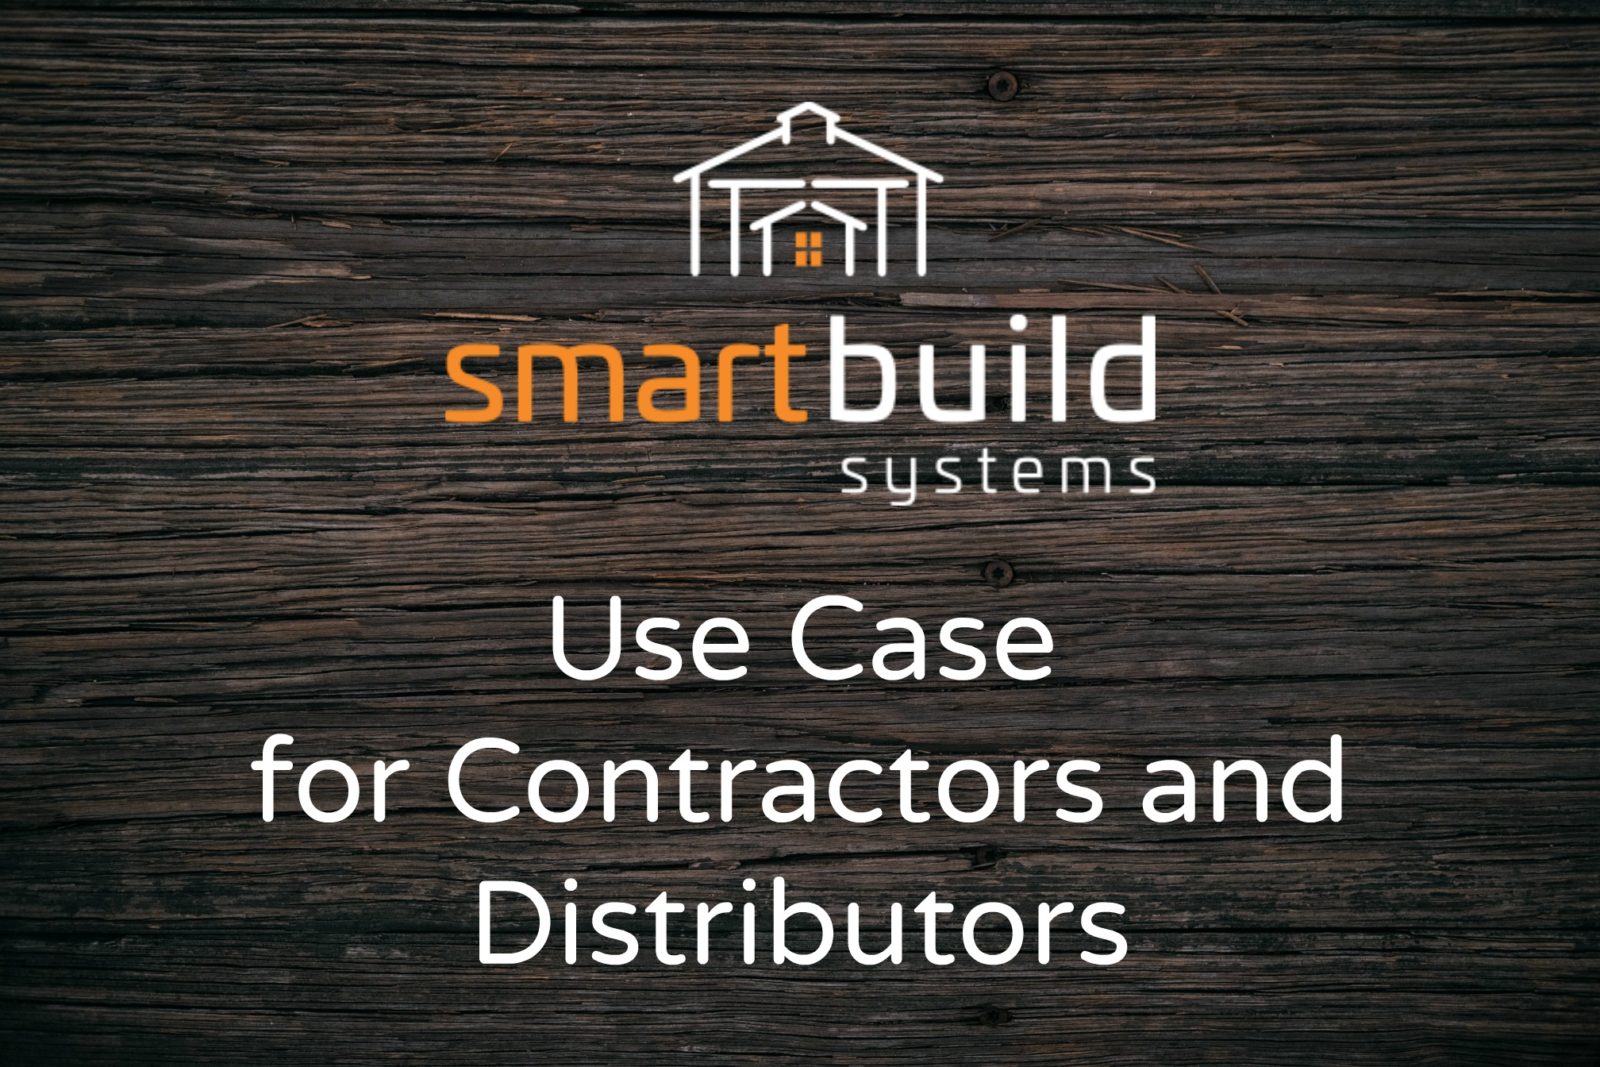 smartbuild systems use case cover